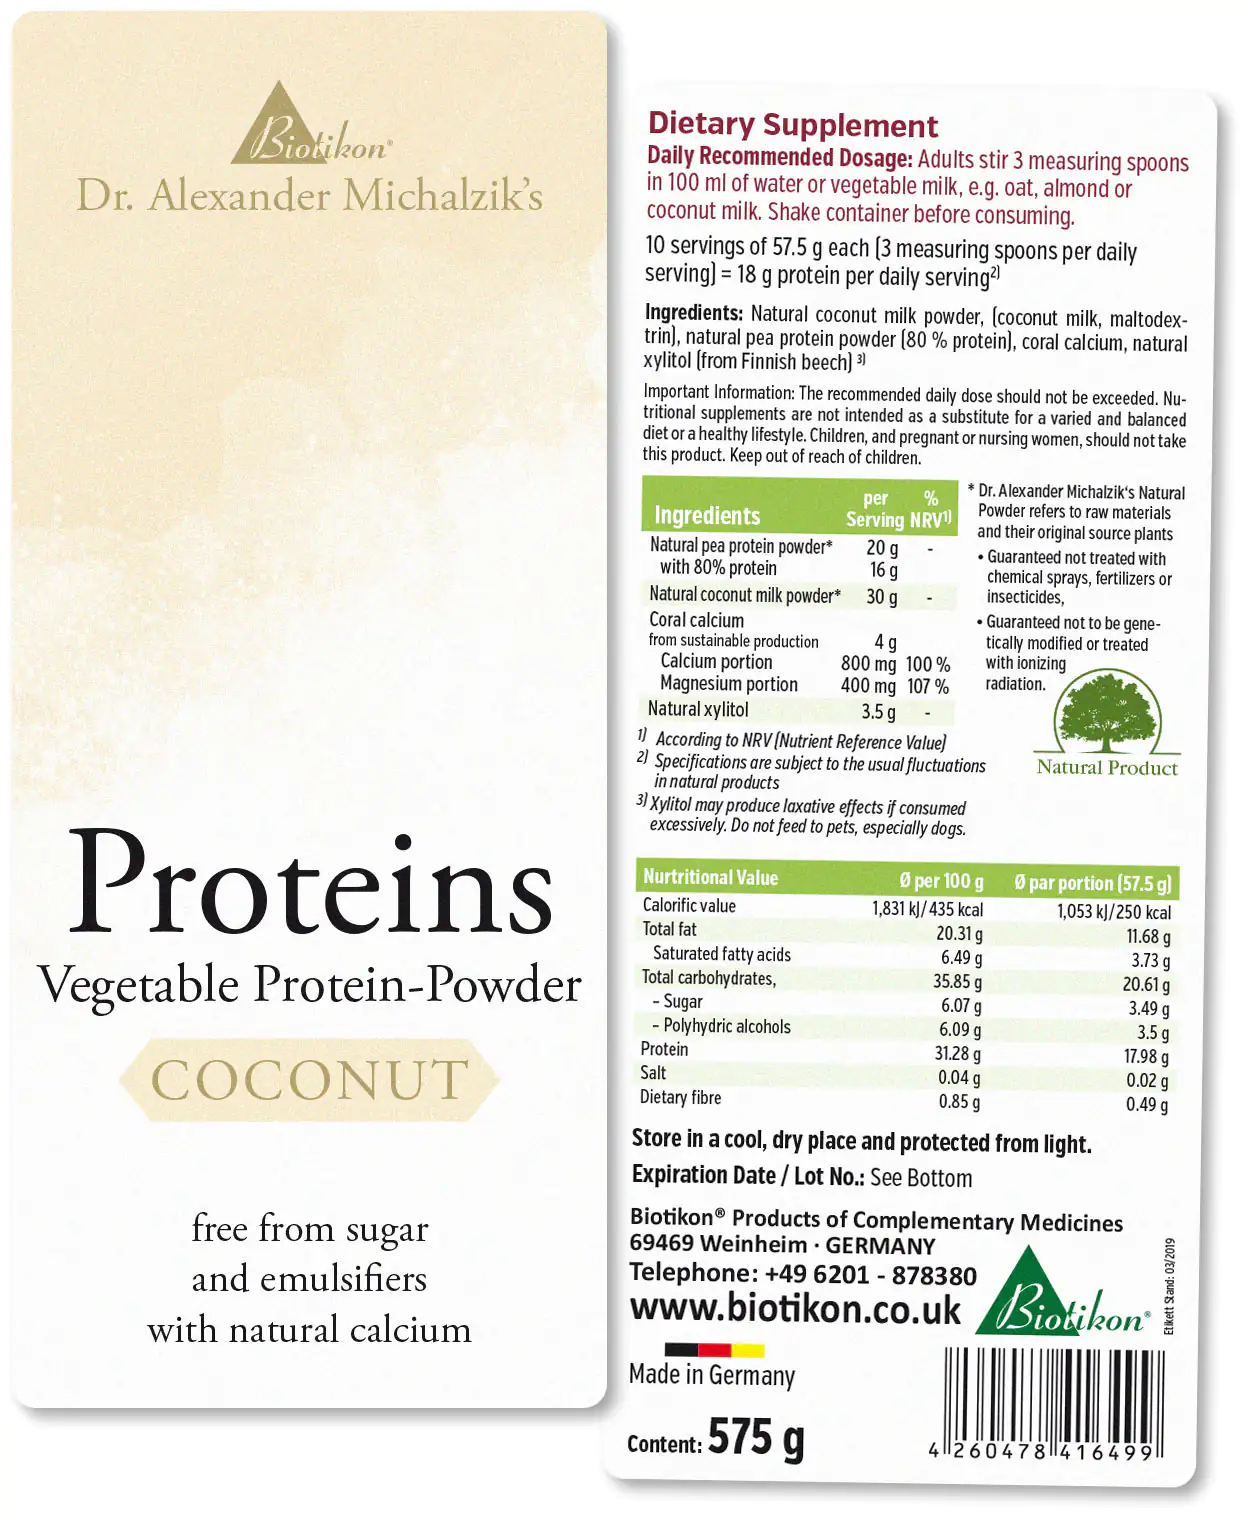 Proteine - 3er-Pack, Kokos